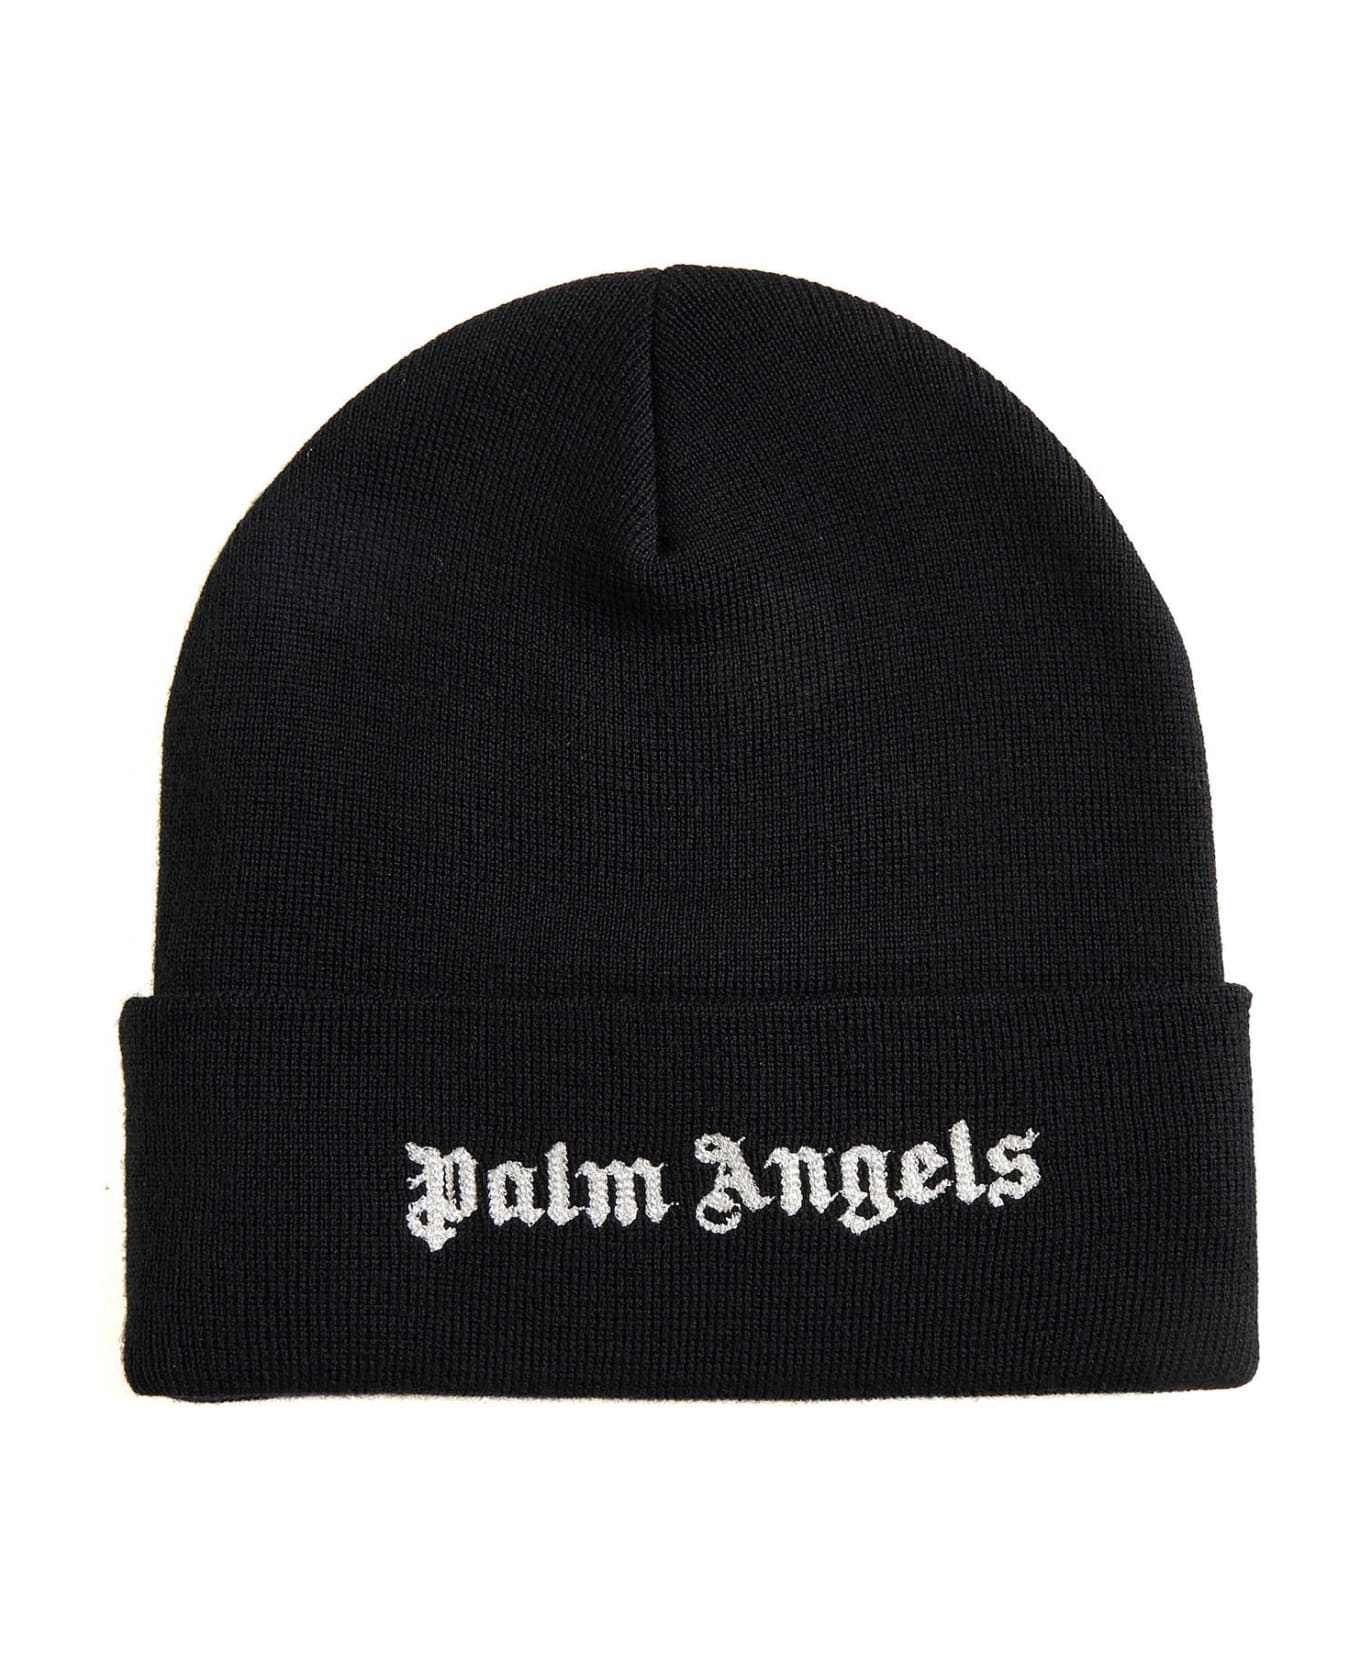 Palm Angels Logo Wool Beanie - Black Whit